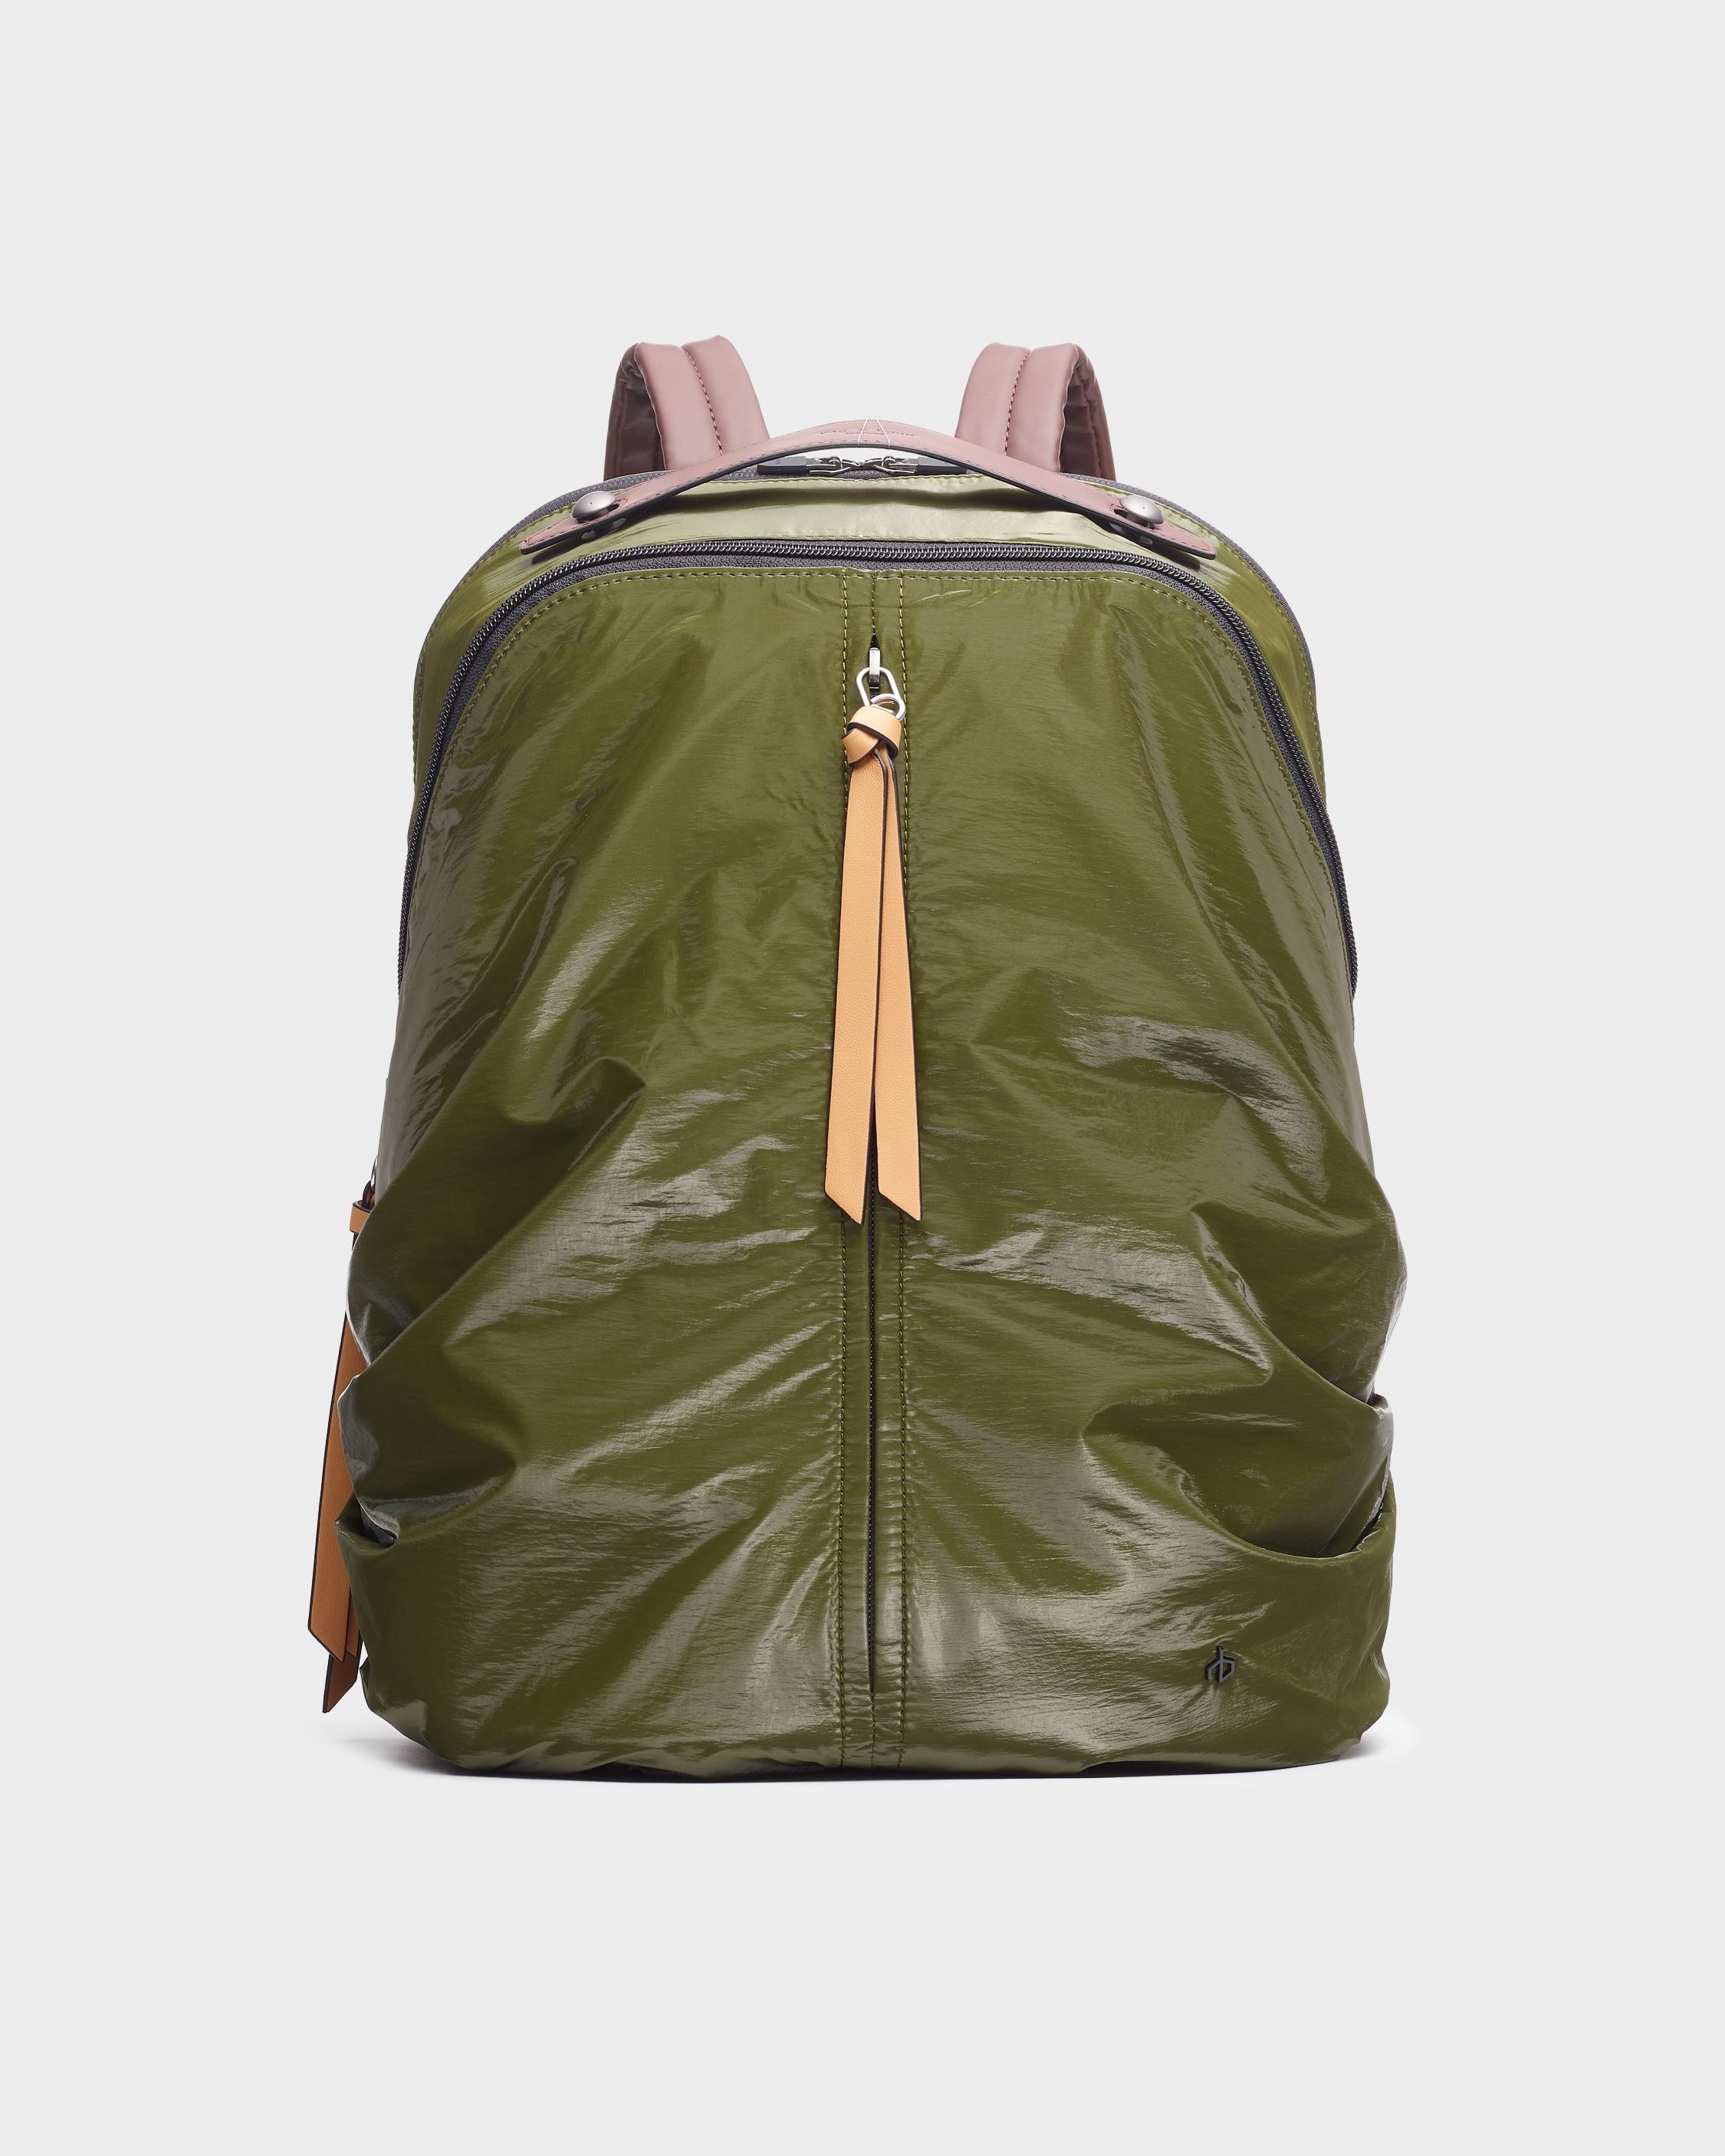 Commuter Backpack - Eco Nylon
Large Backpack - 1